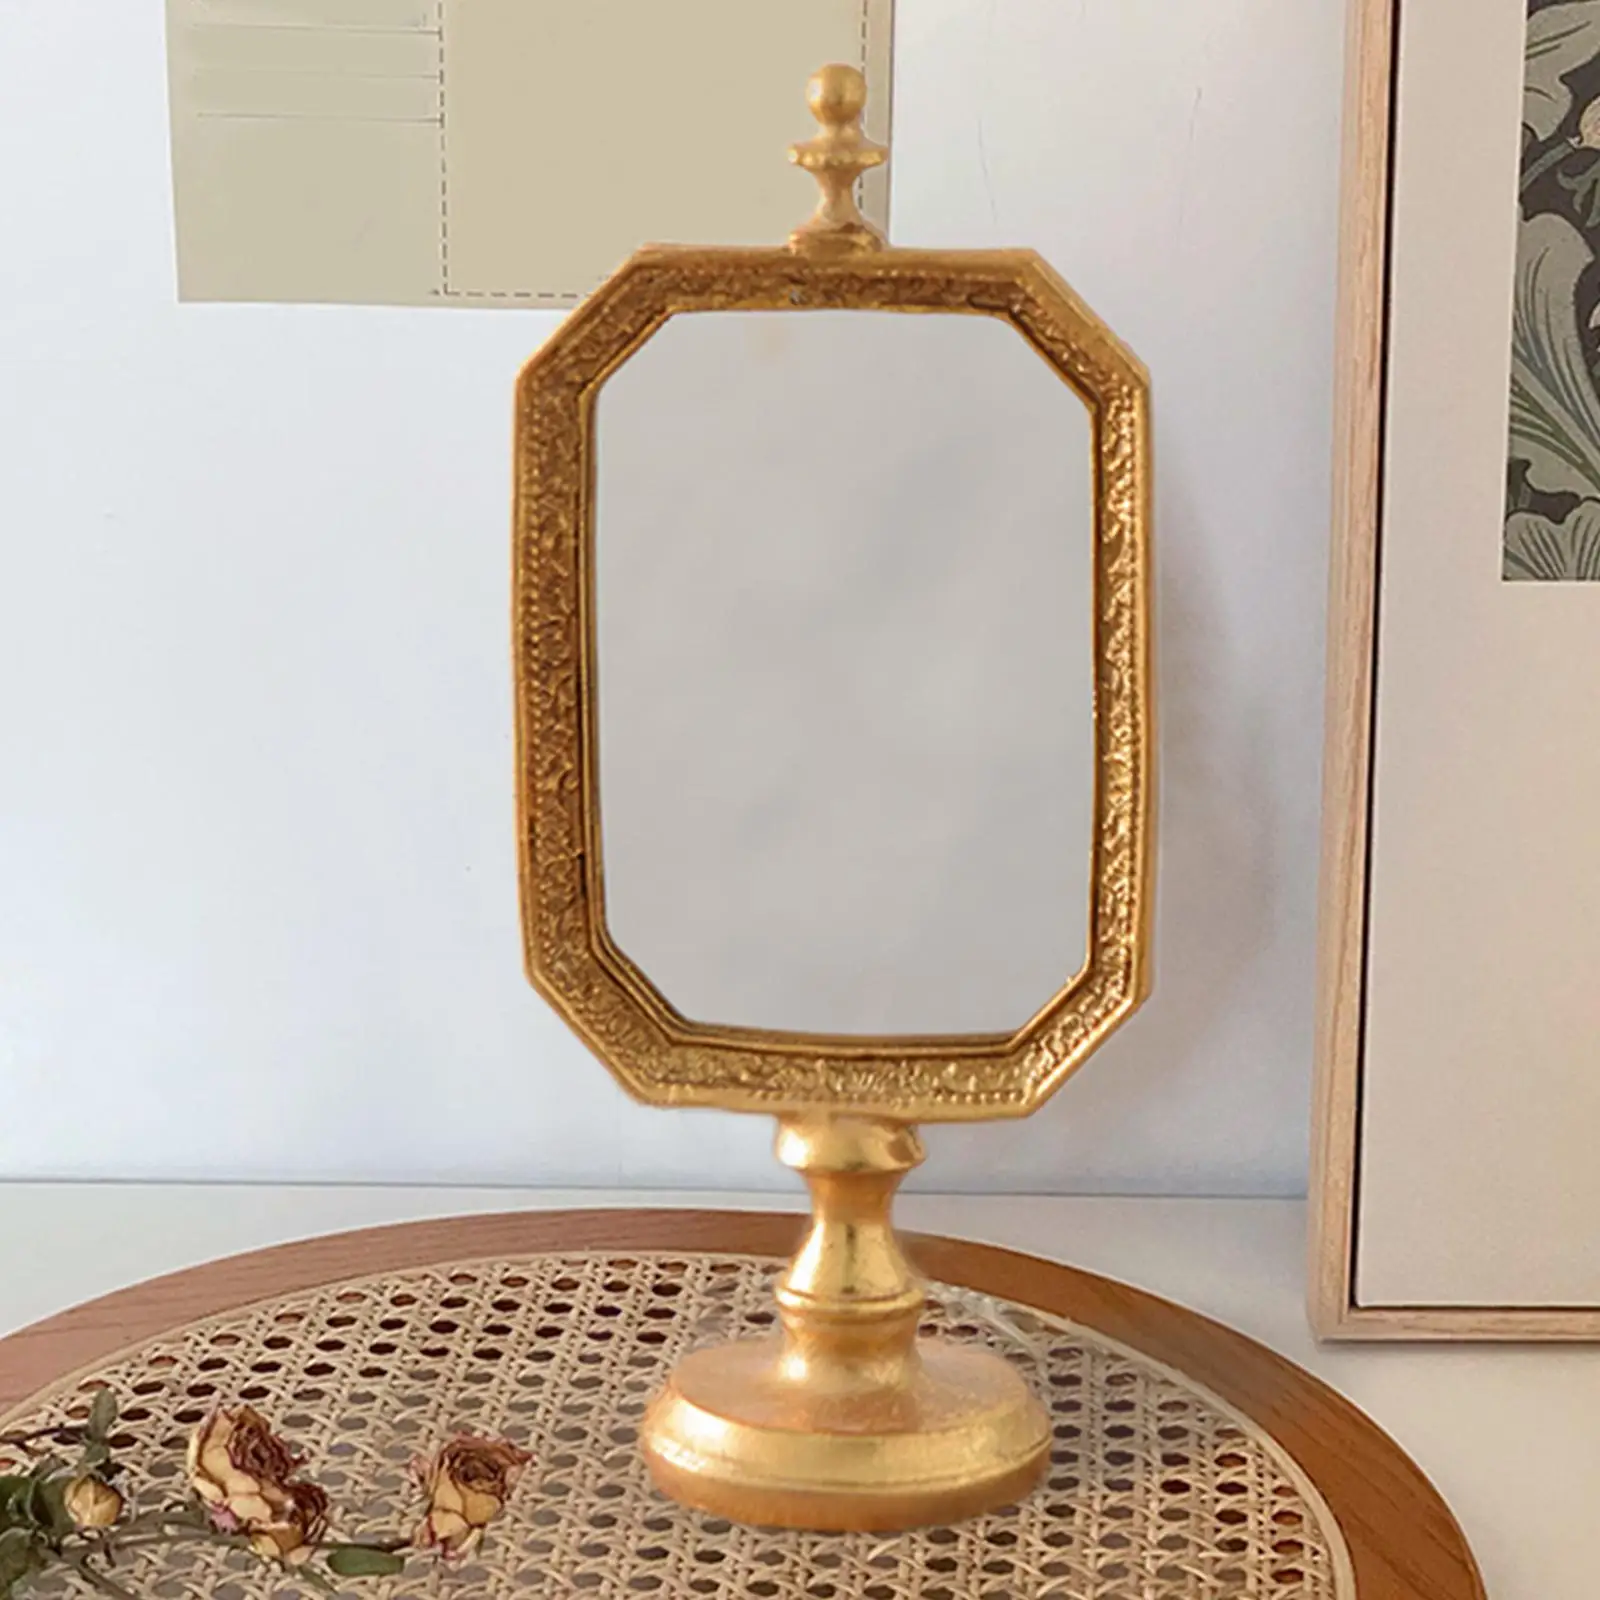 Antique Style Makeup Mirror Home Furnishing Decoration Dresser Counter Display Elegant Vanity Mirror for Hotel Bedroom Desktop